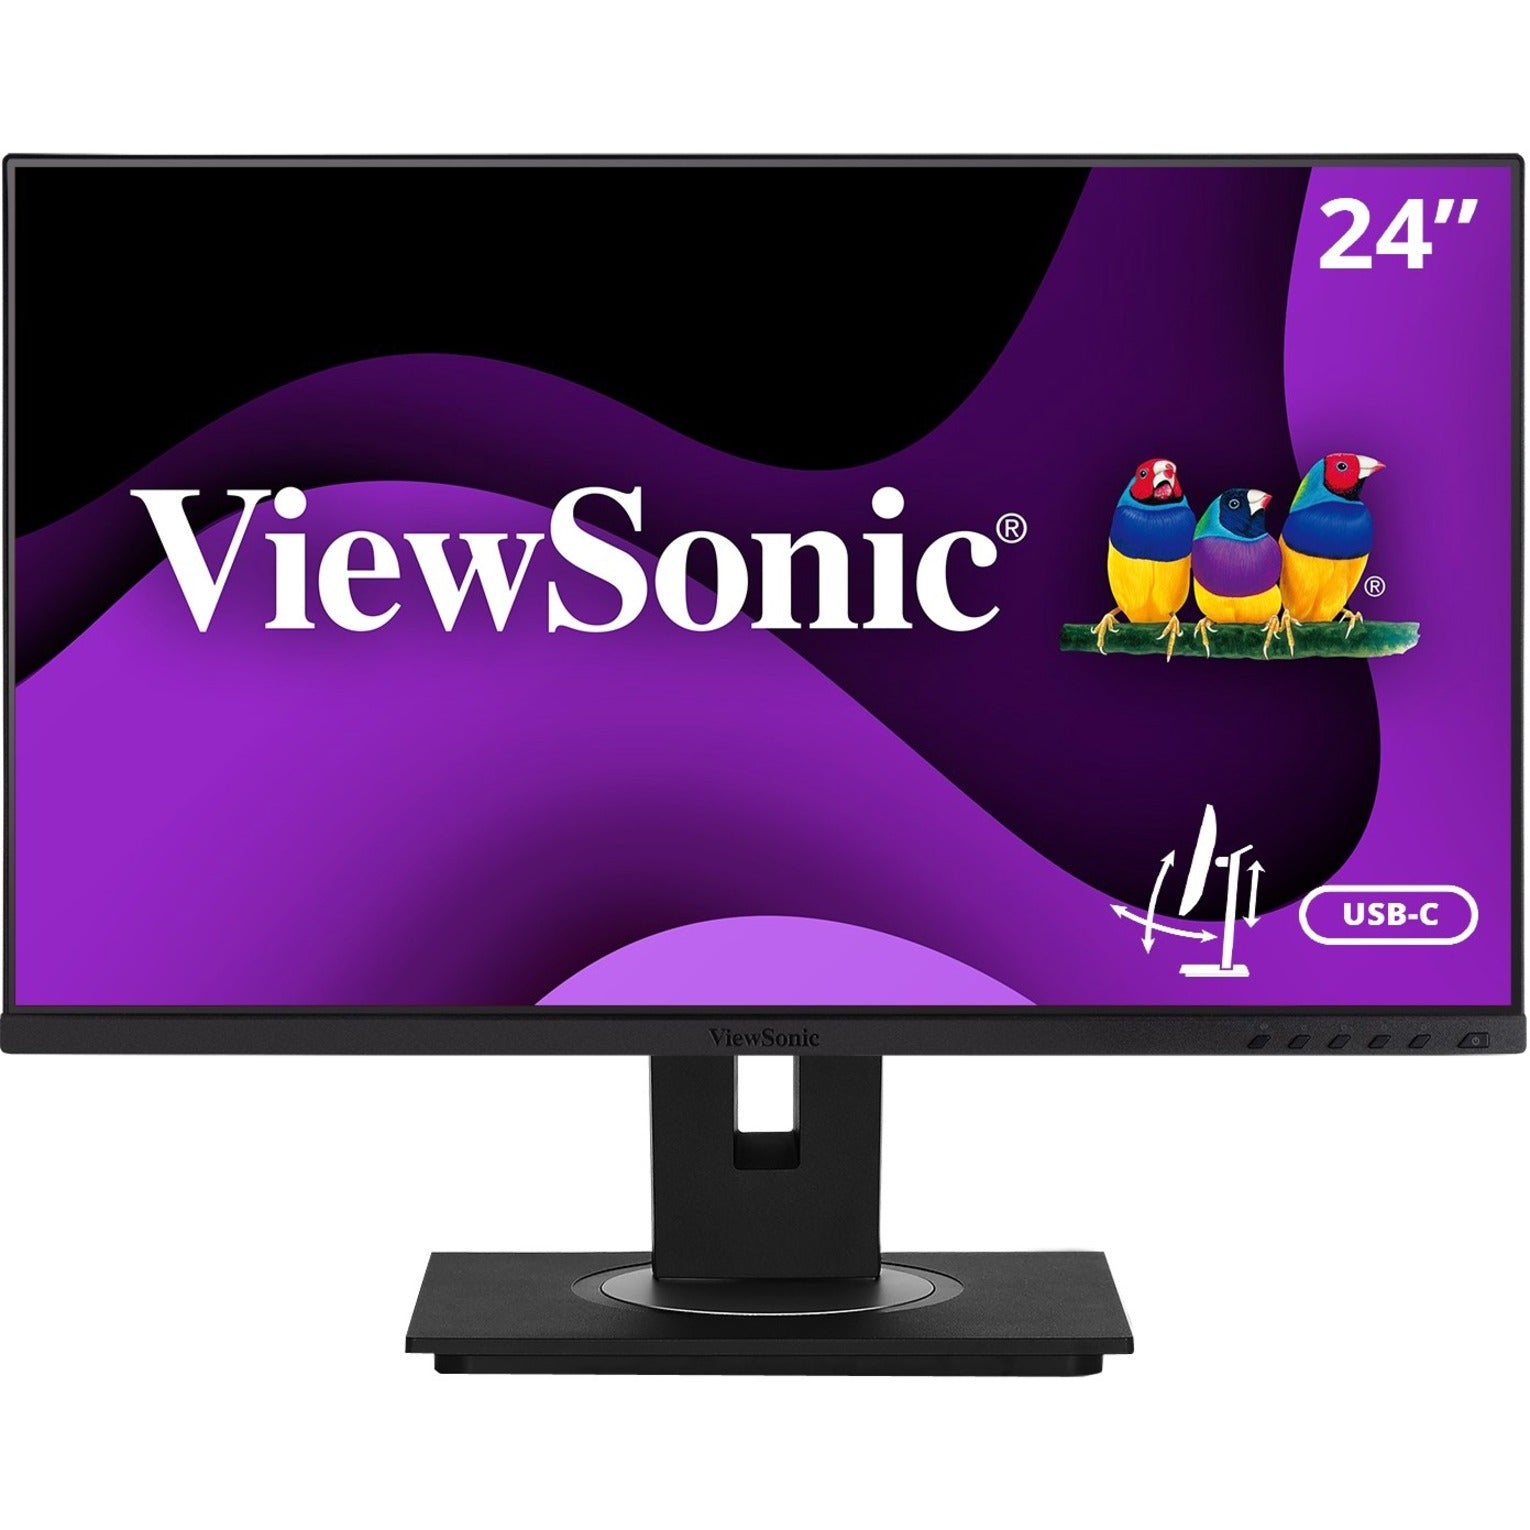 ViewSonic VG2455 Widescreen LCD Monitor, Full HD, Advanced Ergonomics